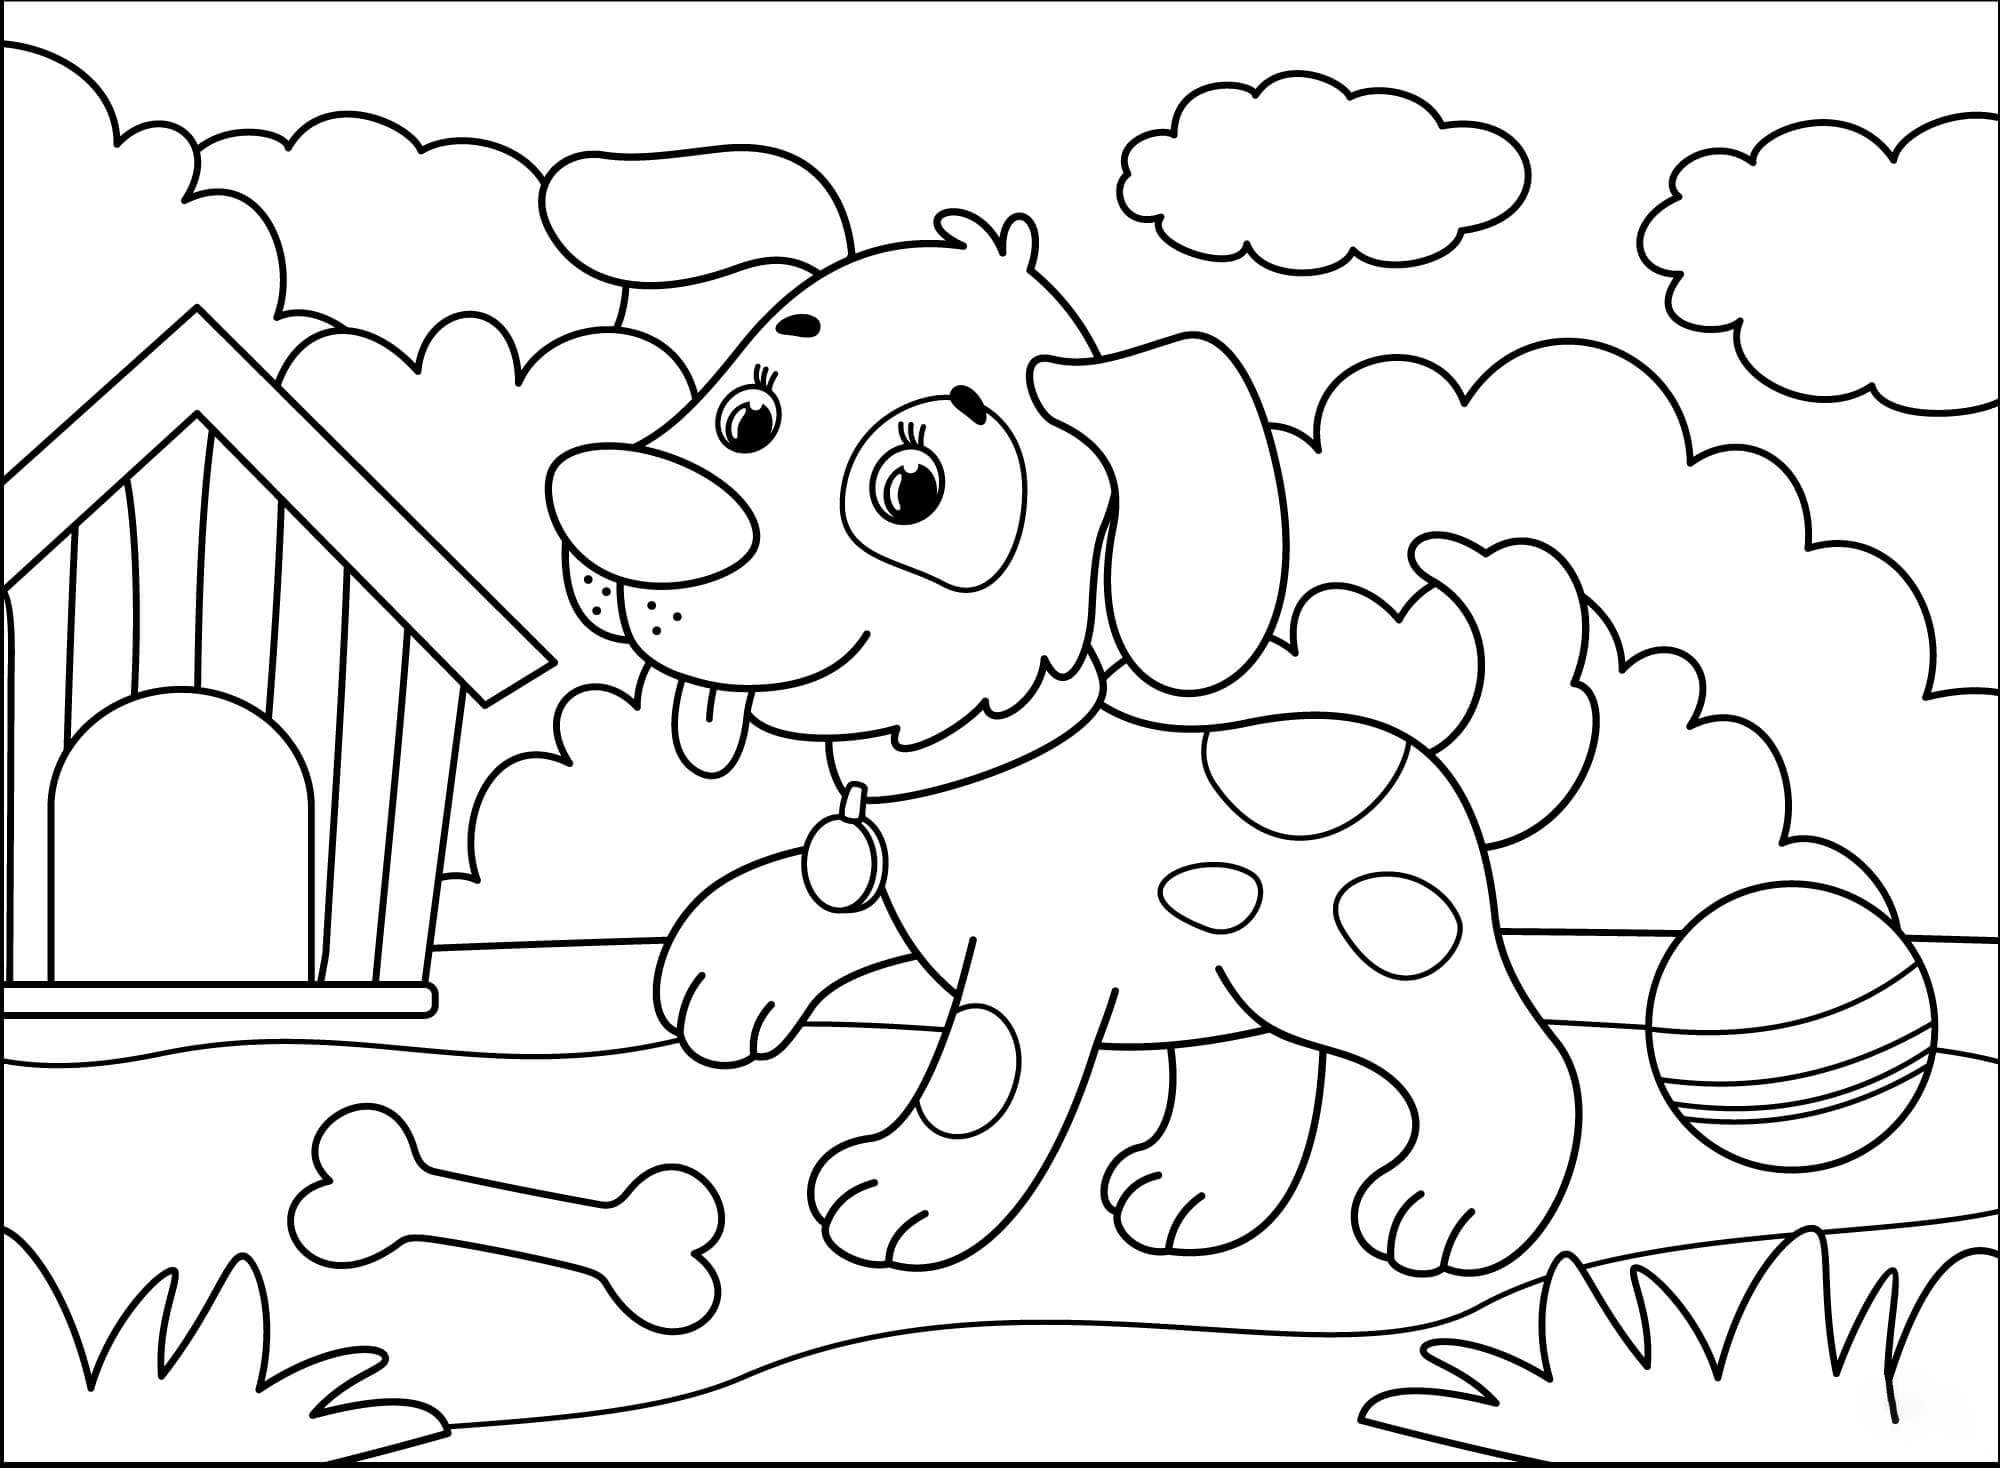 Página para colorir de cachorro de cães